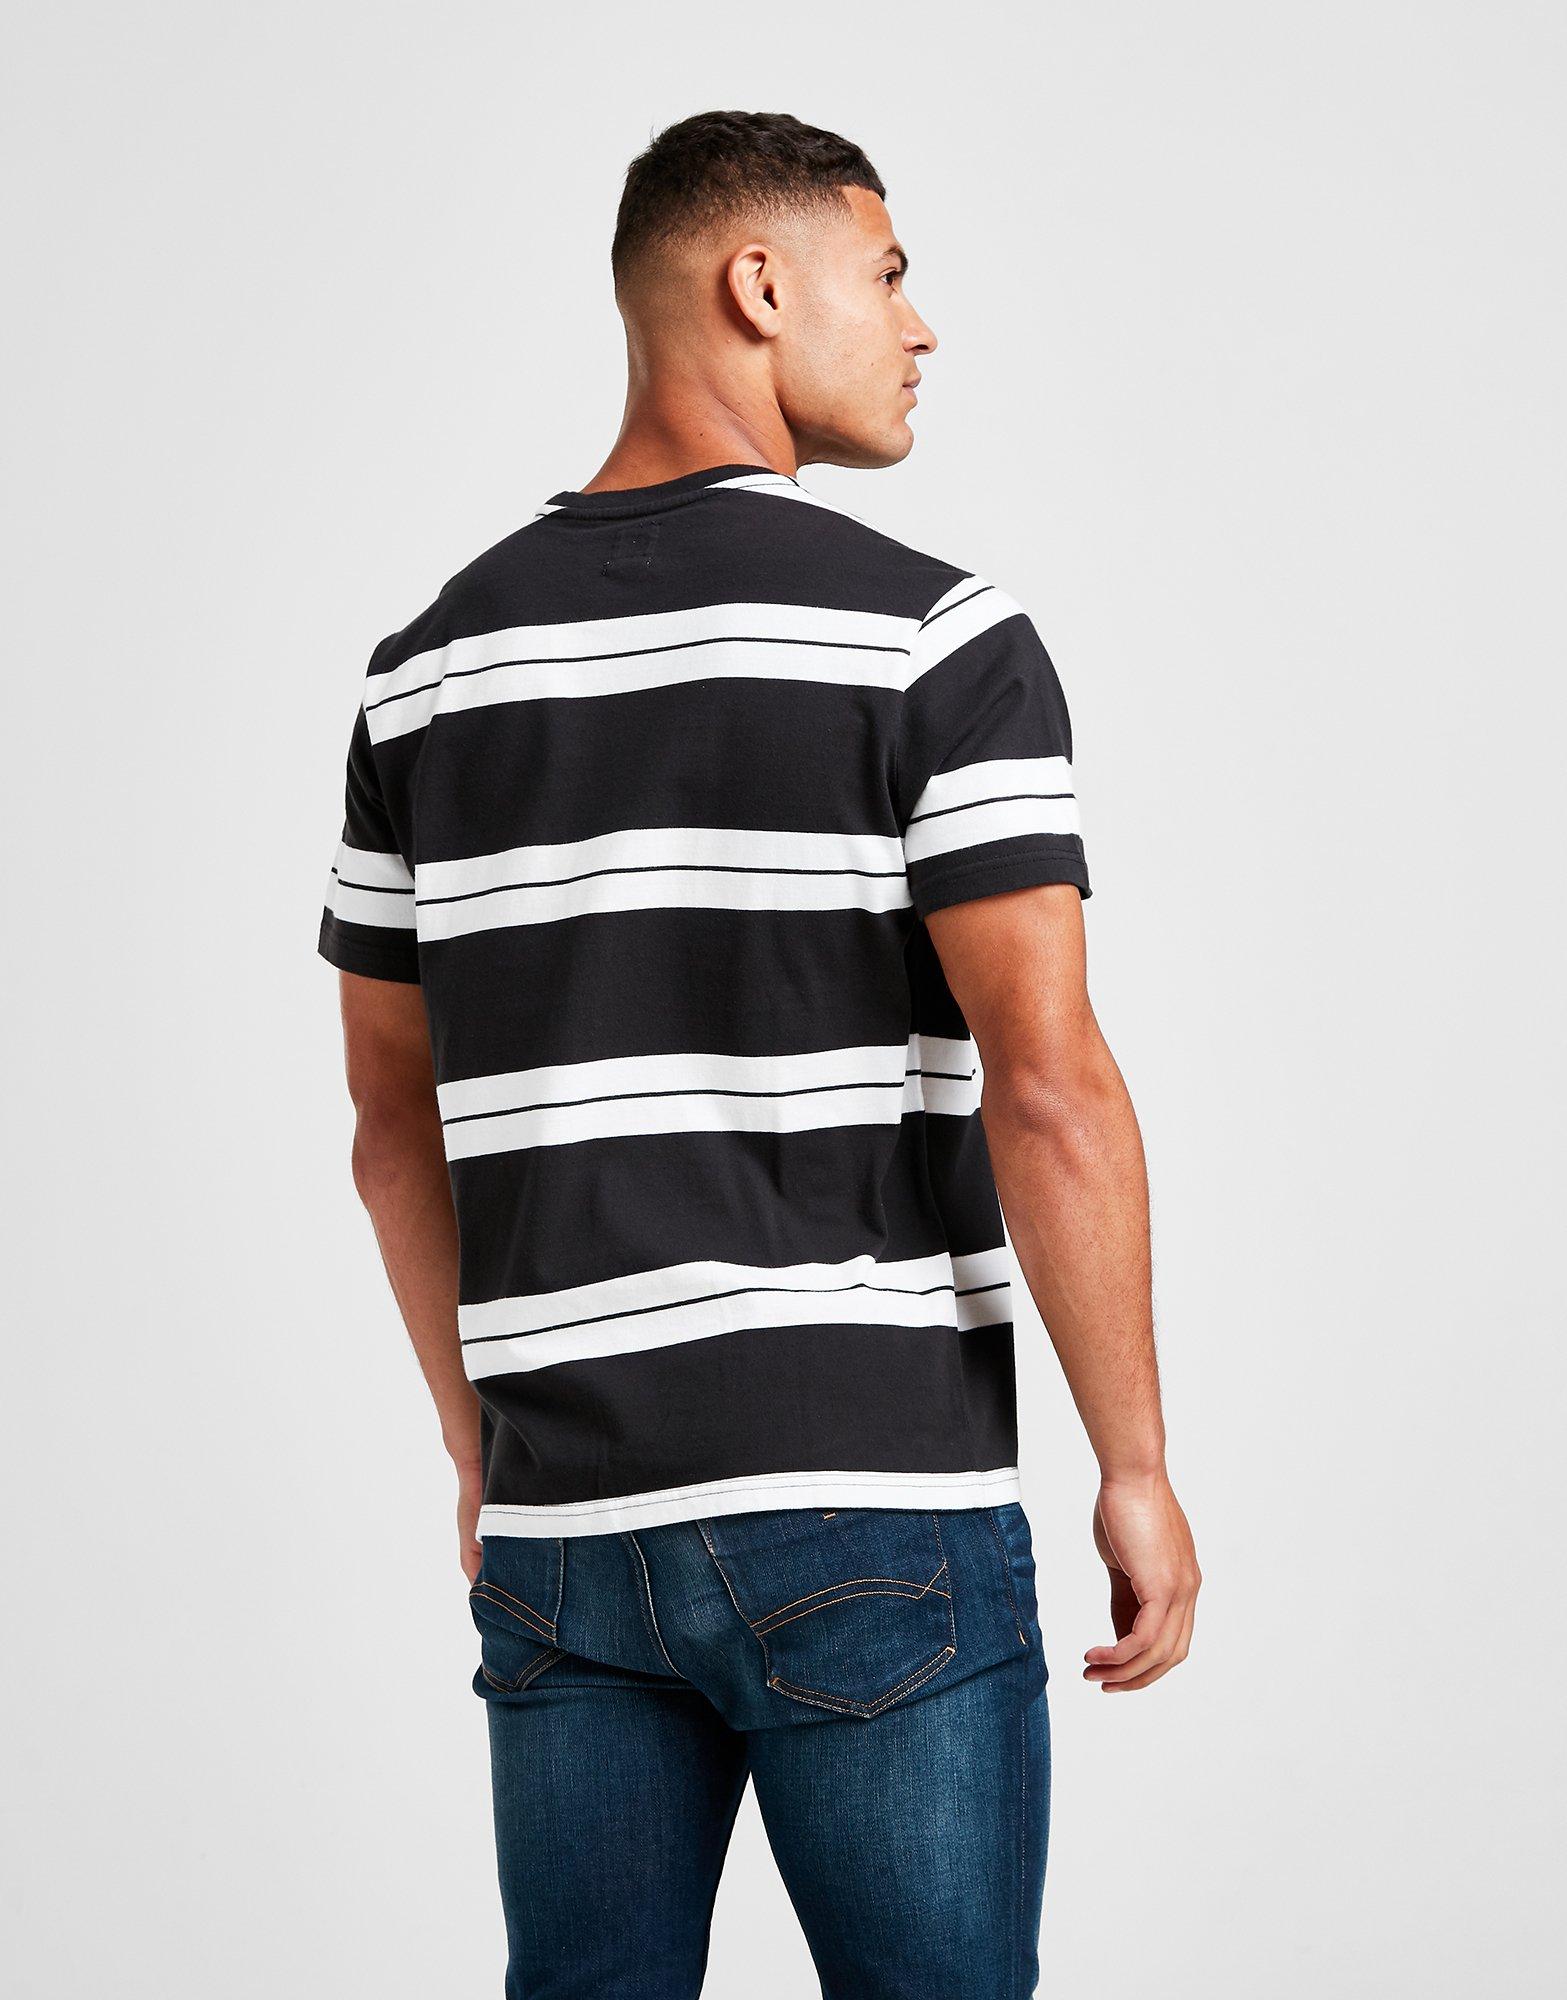 levi's black and white striped t shirt